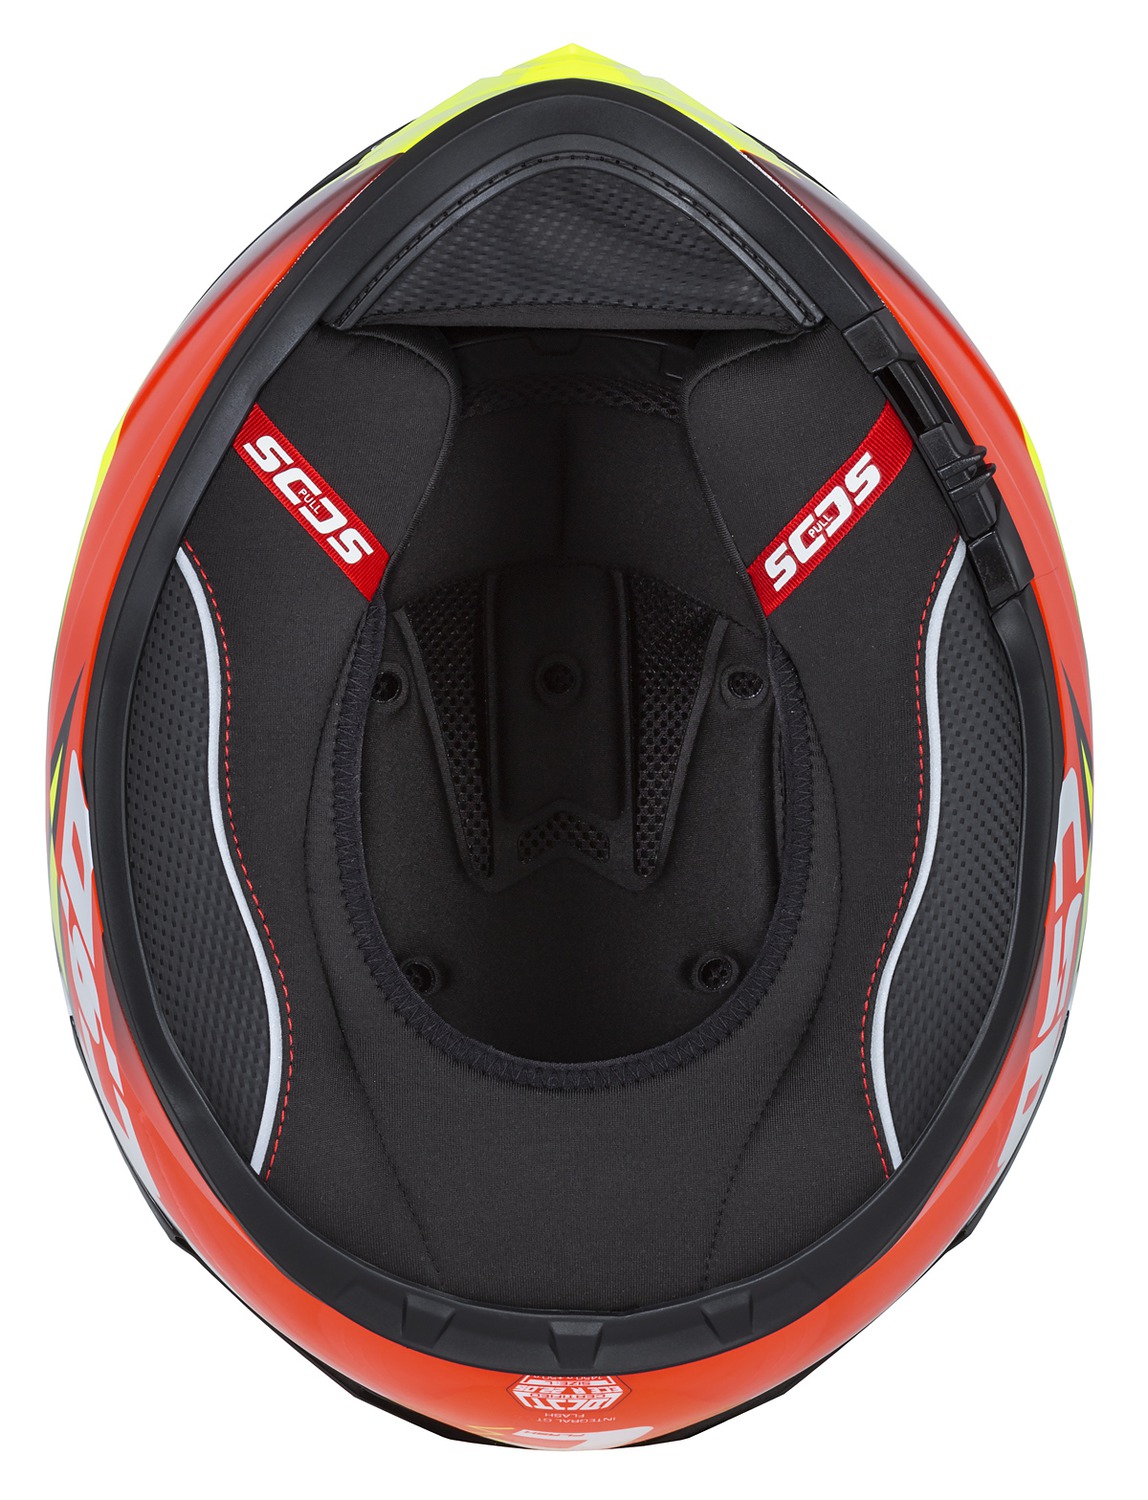 helmet Integral GT 2.1 Flash, CASSIDA (yellow fluo/red fluo/black/white) Pinlock ready visor 2023